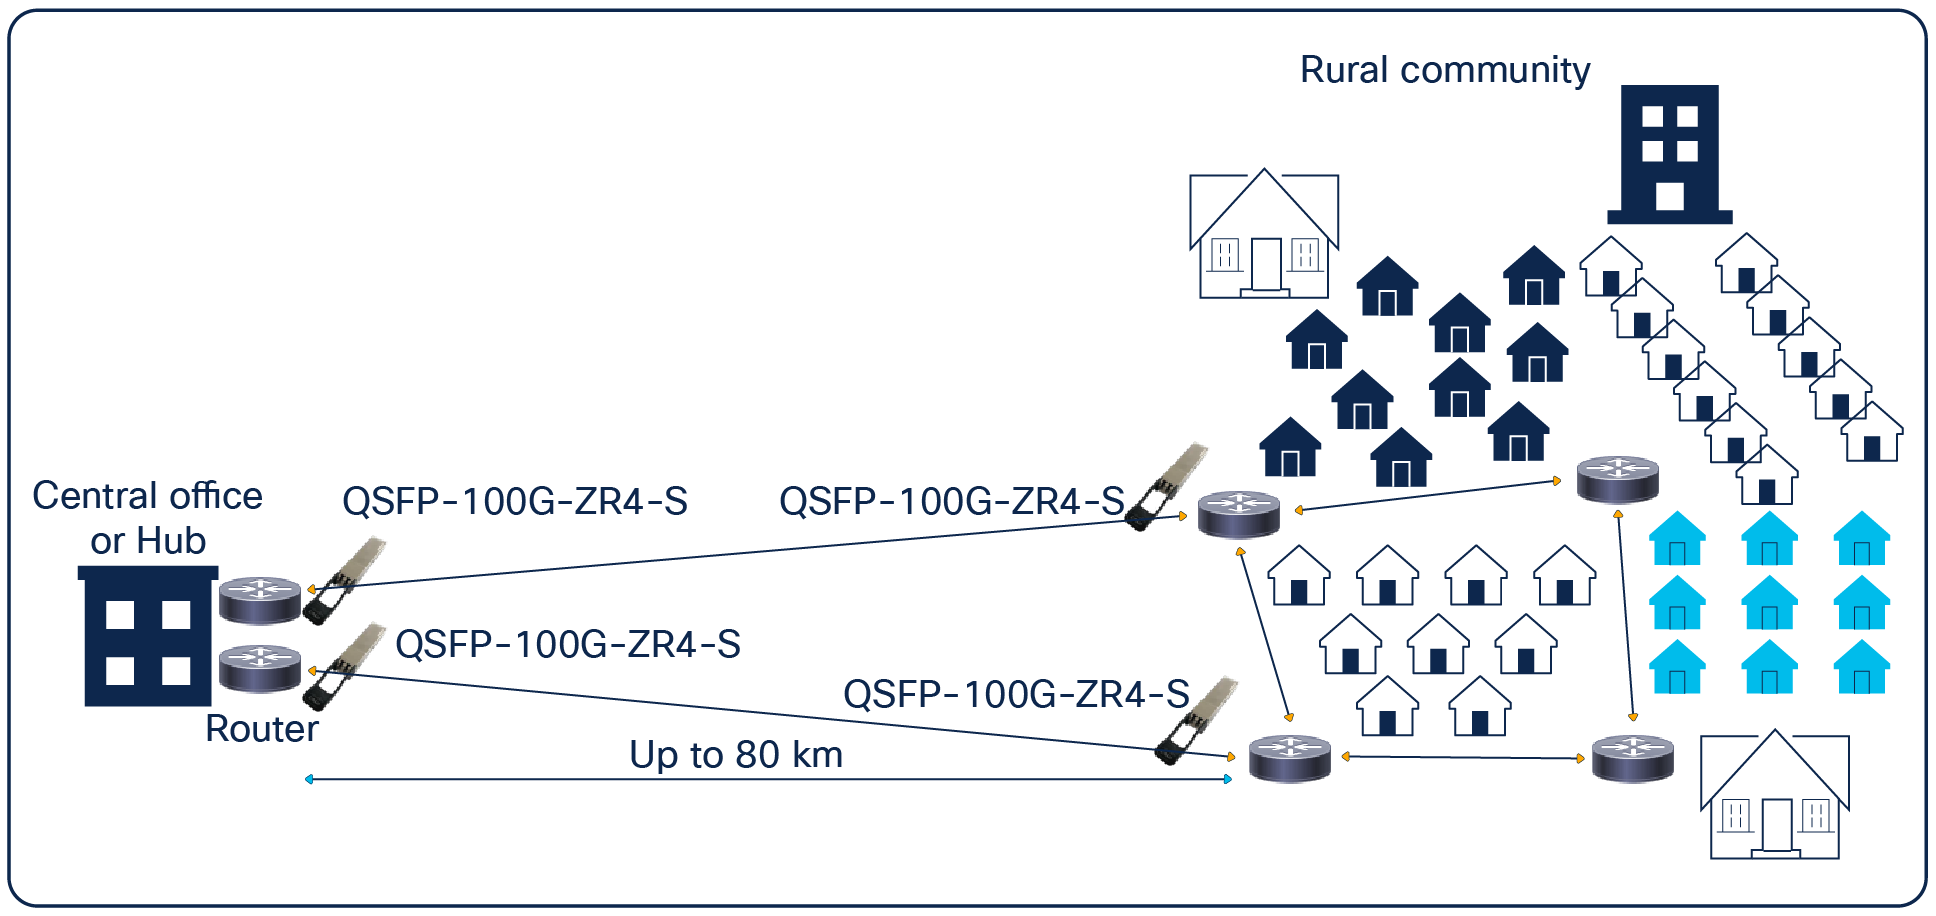 Rural broadband application of the QSFP-100G-ZR4-S